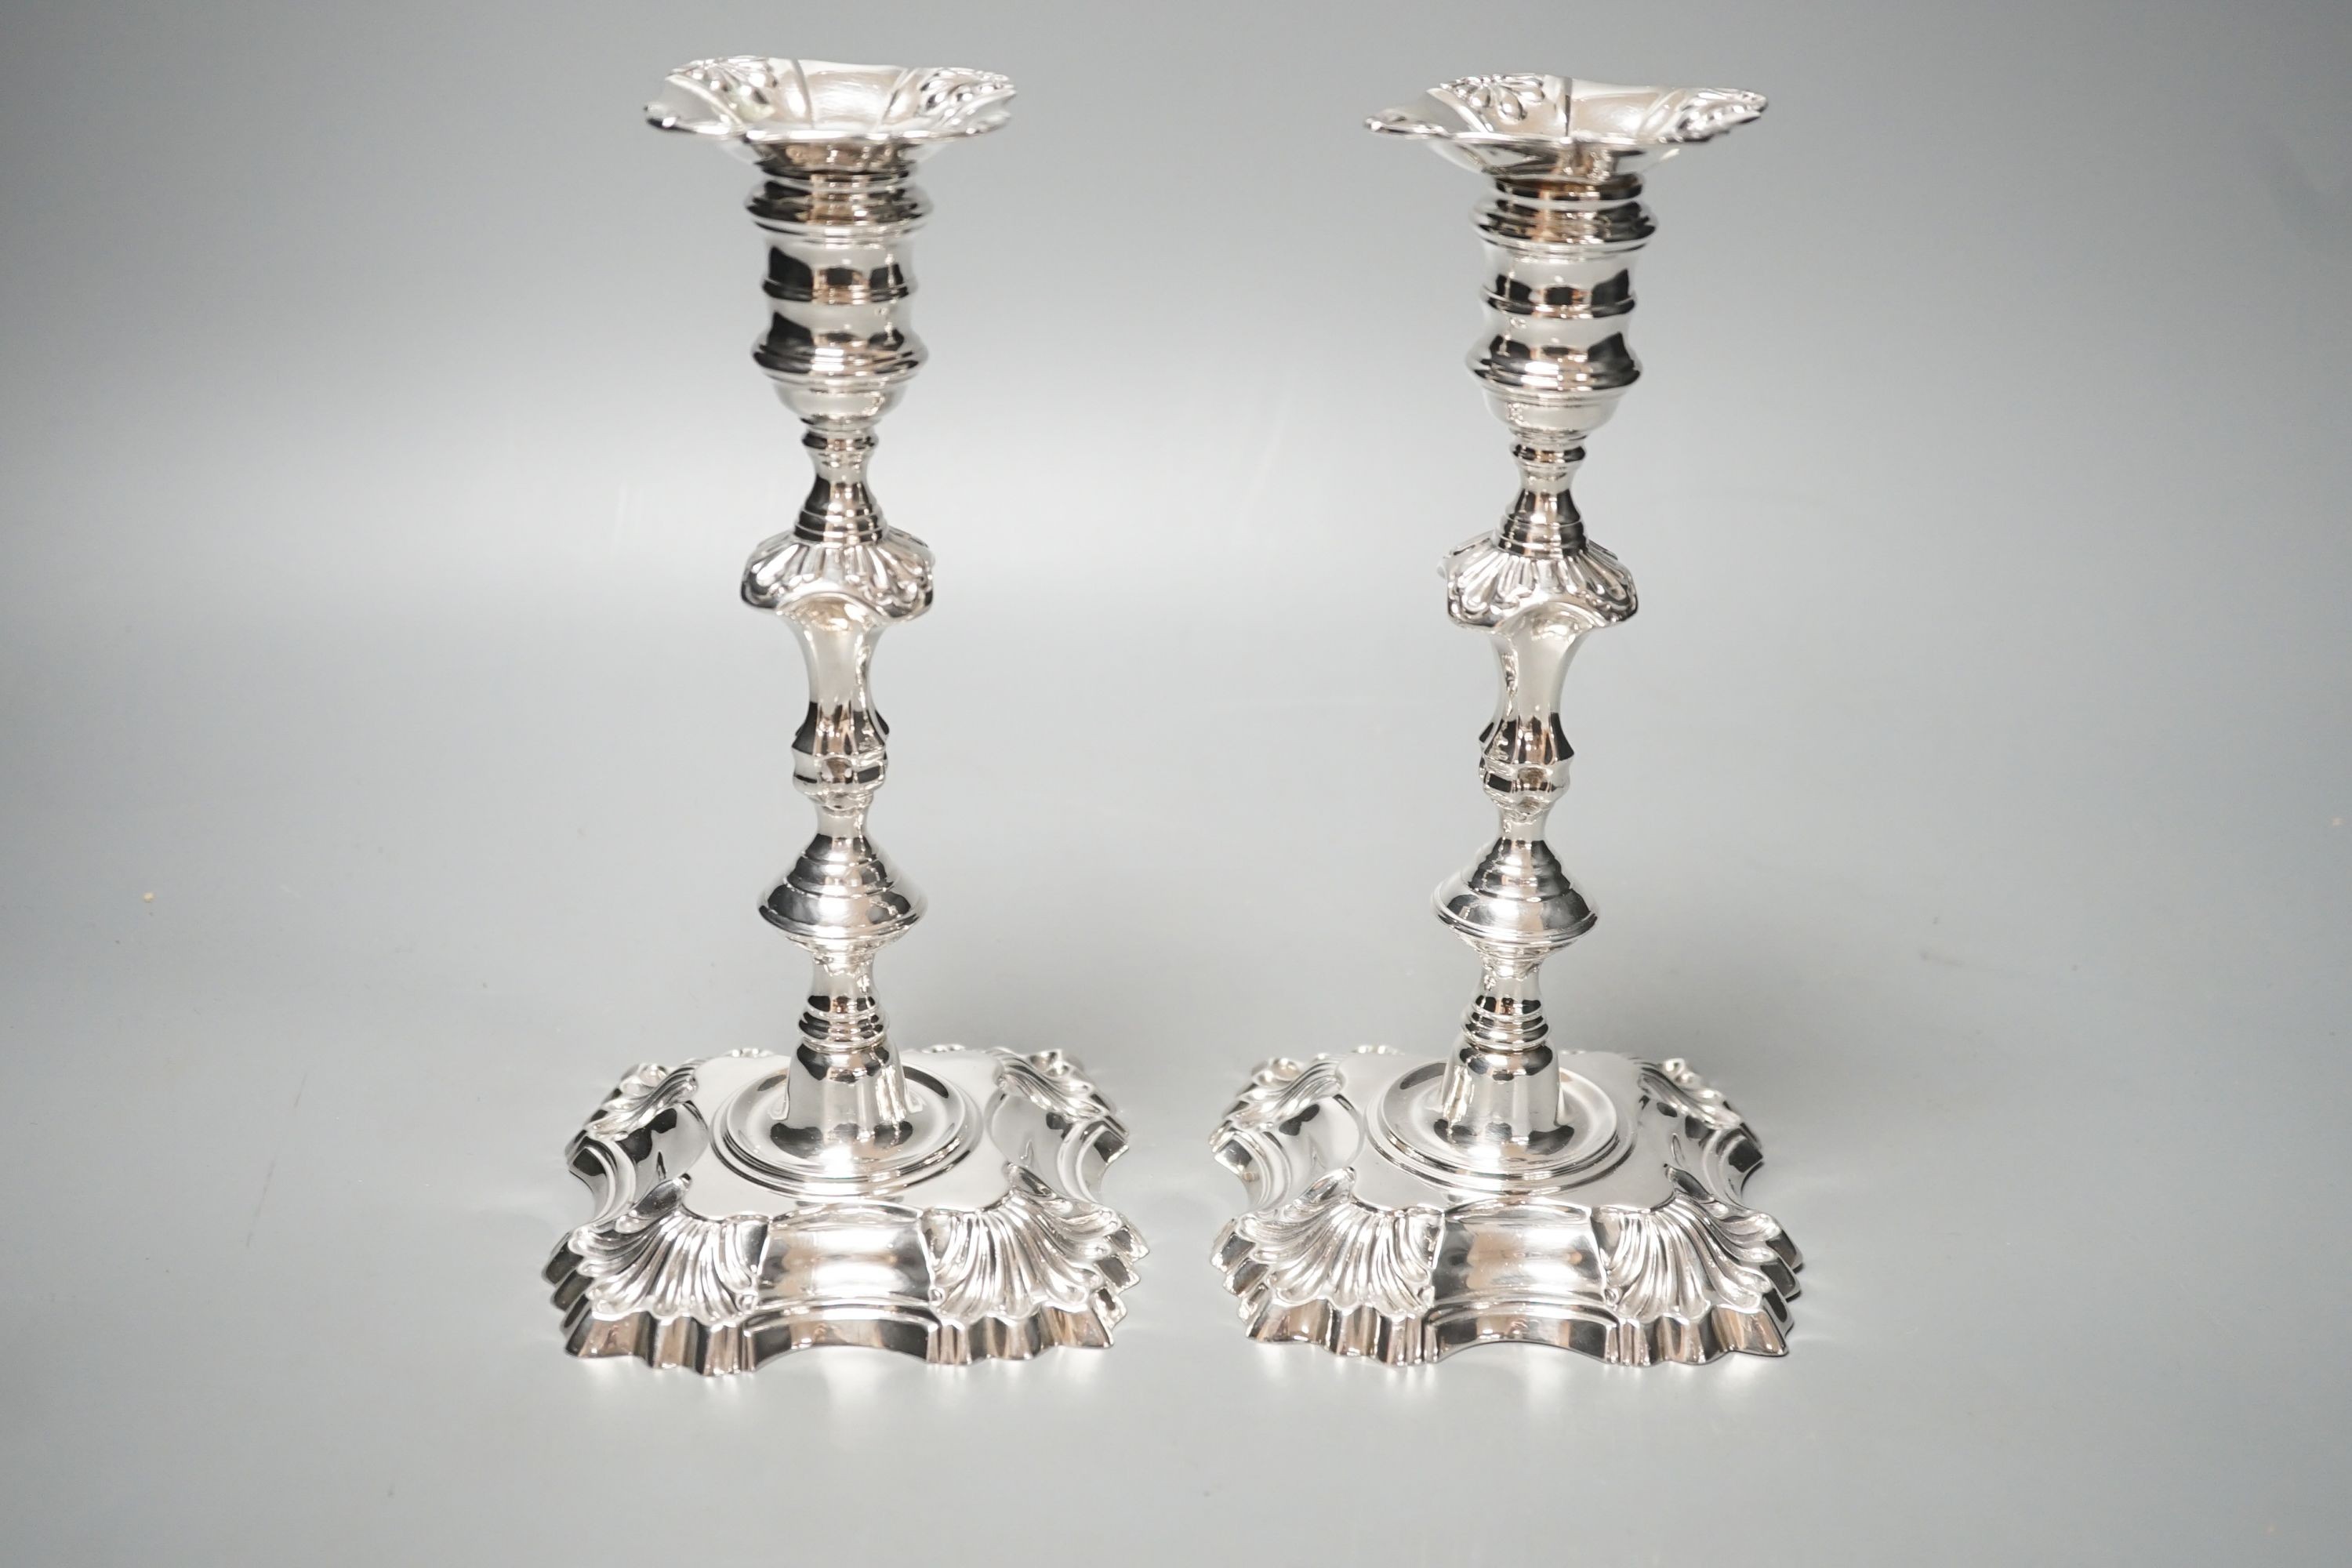 A pair of modern Georgian style cast silver candlesticks, J.B. Chatterley & Sons Ltd, Birmingham,1971, 20.9cm, 34.5oz.